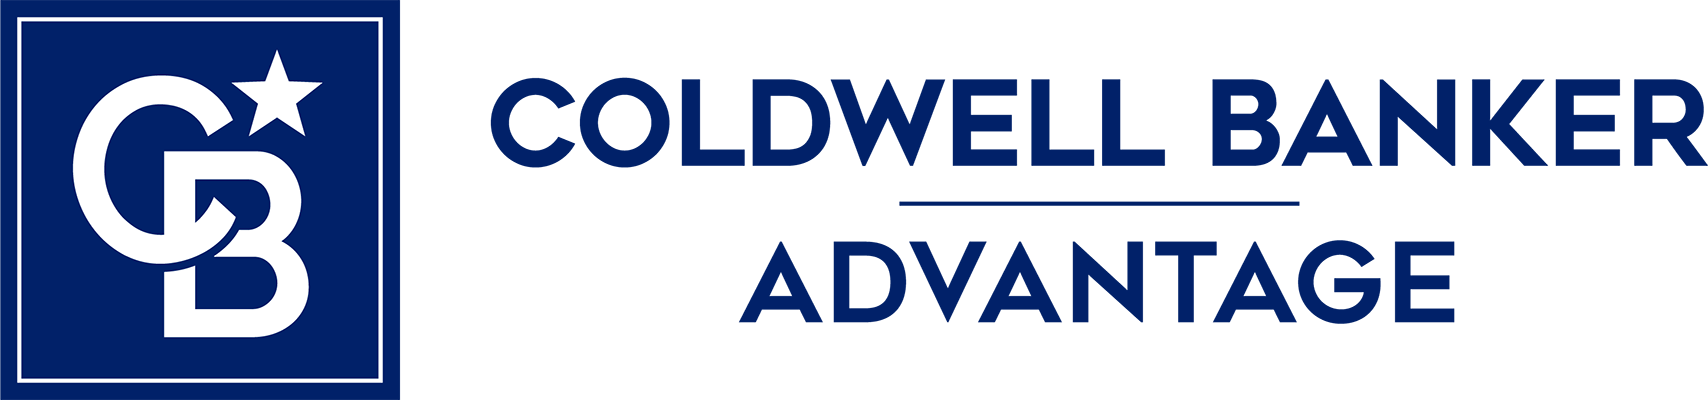 Karen Conley - Coldwell Banker Advantage Logo